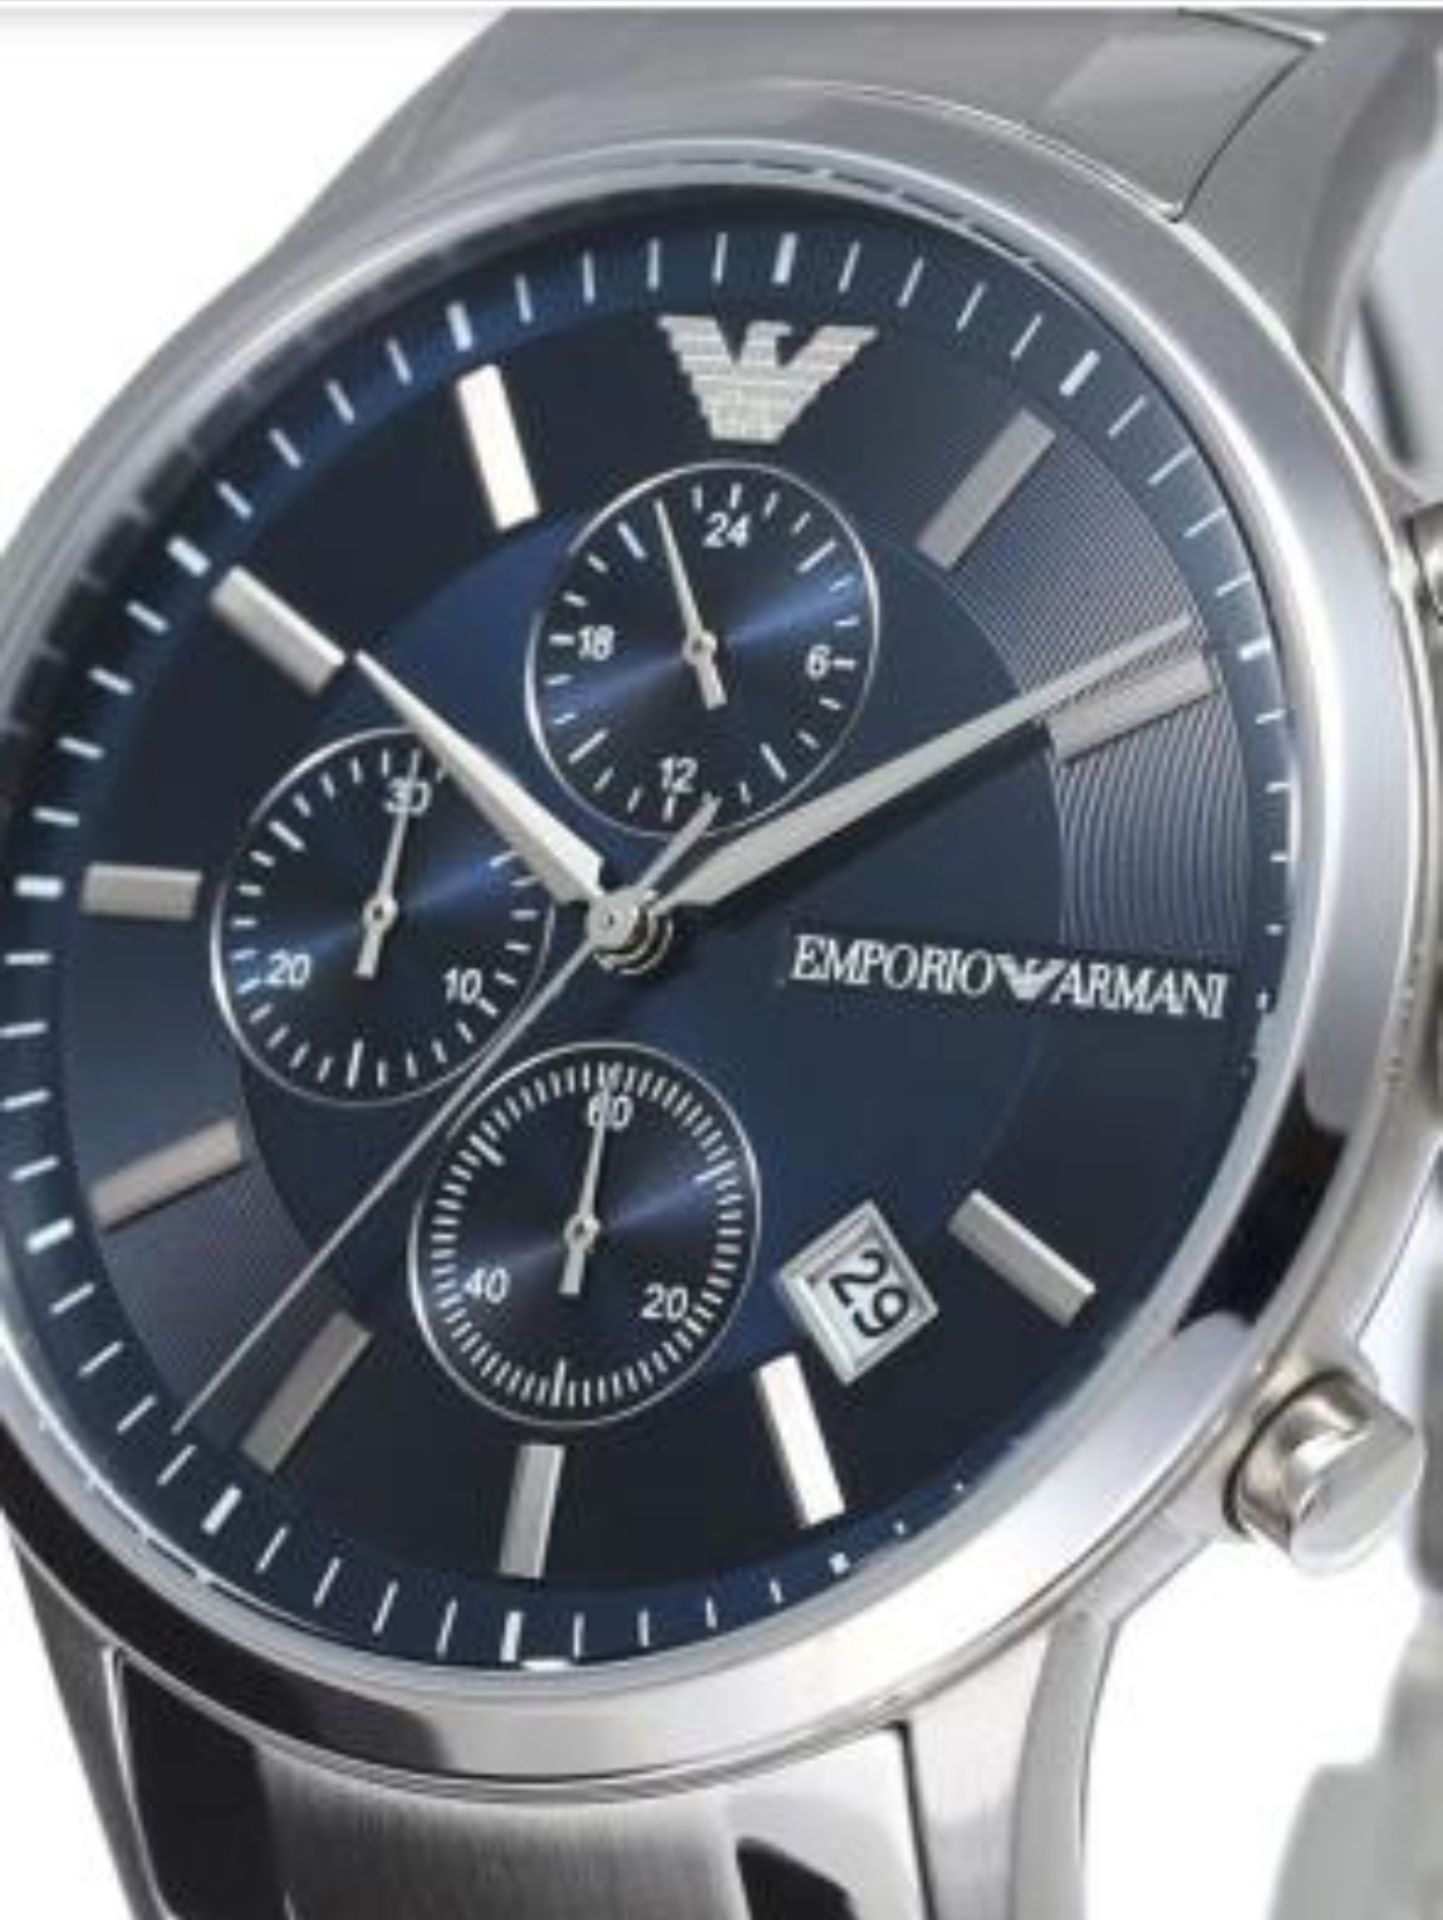 Emporio Armani AR11164 Men's Blue Dial Silver Bracelet Chronograph Watch - Image 4 of 6